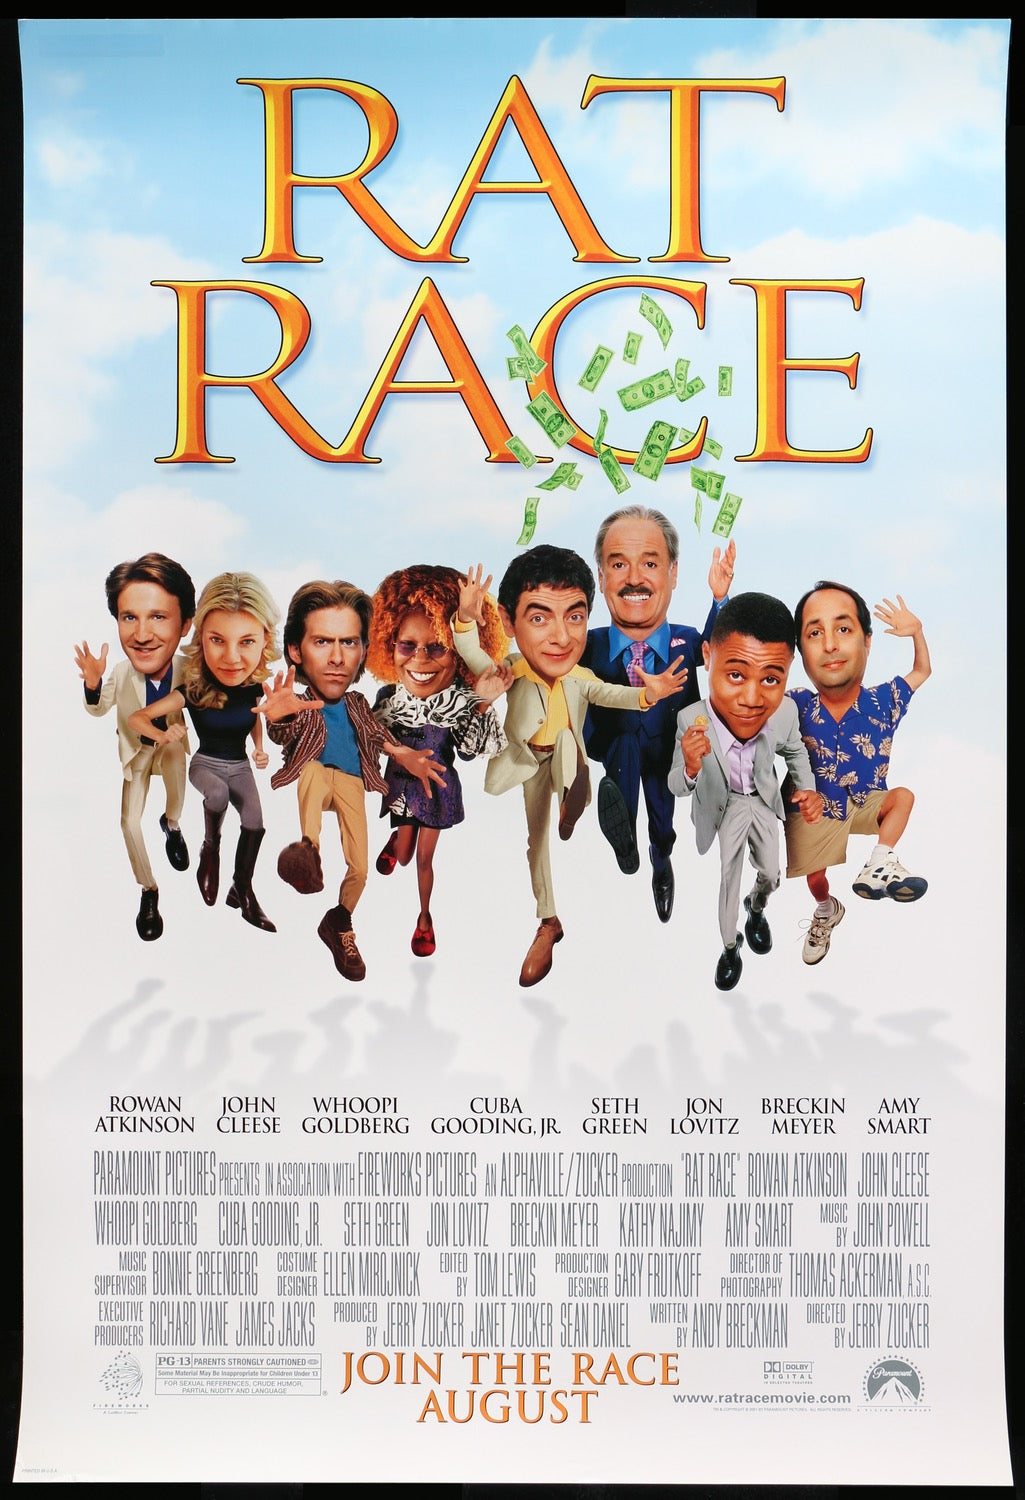 Rat Race (2001) original movie poster for sale at Original Film Art